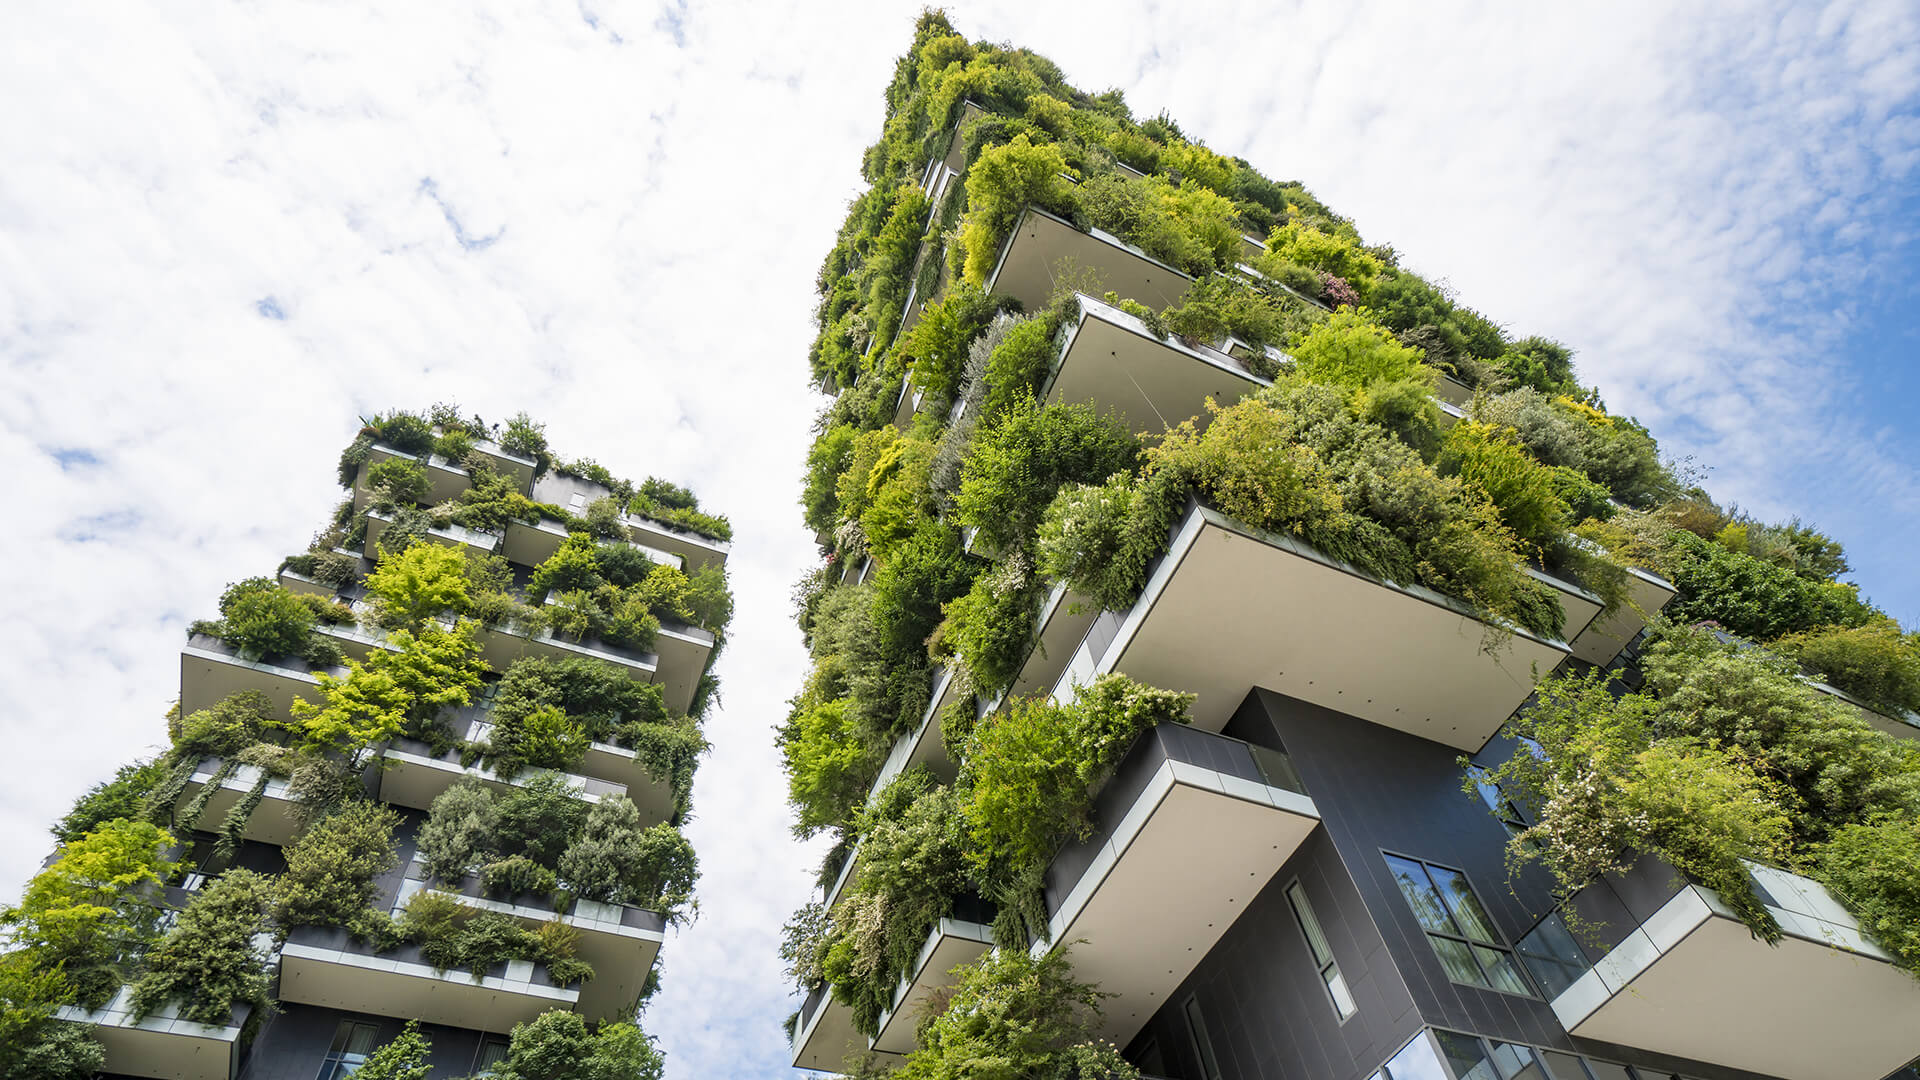 Sustainable building with vertical garden on balconies